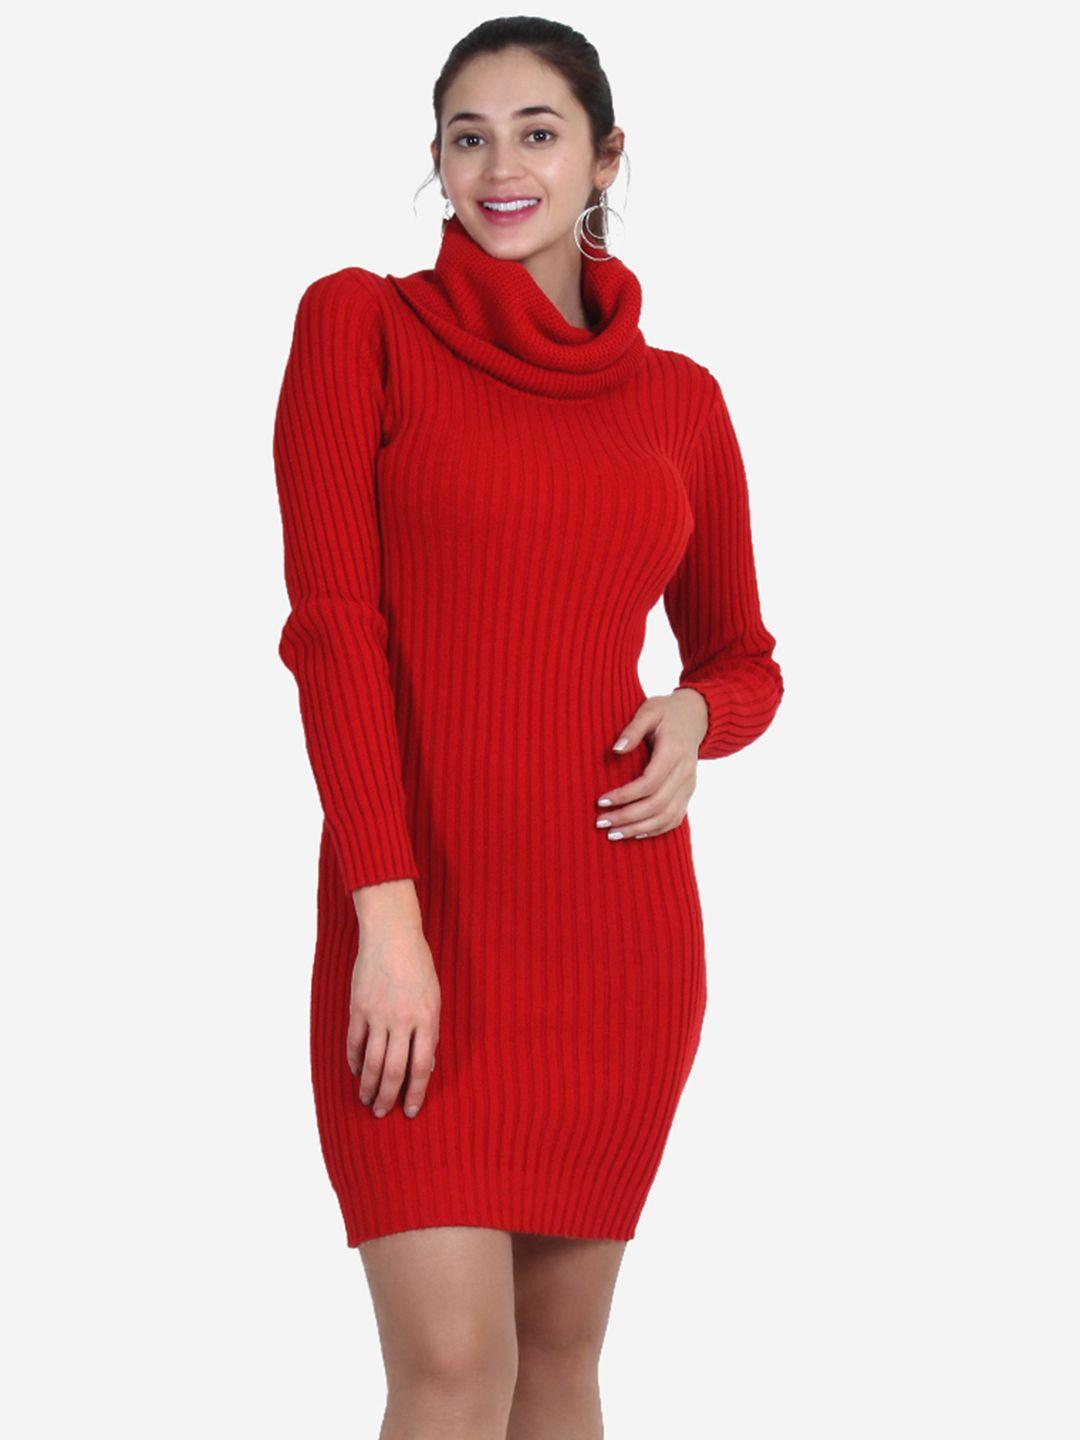 joe hazel red solid pure cotton cowl neck sweater dress